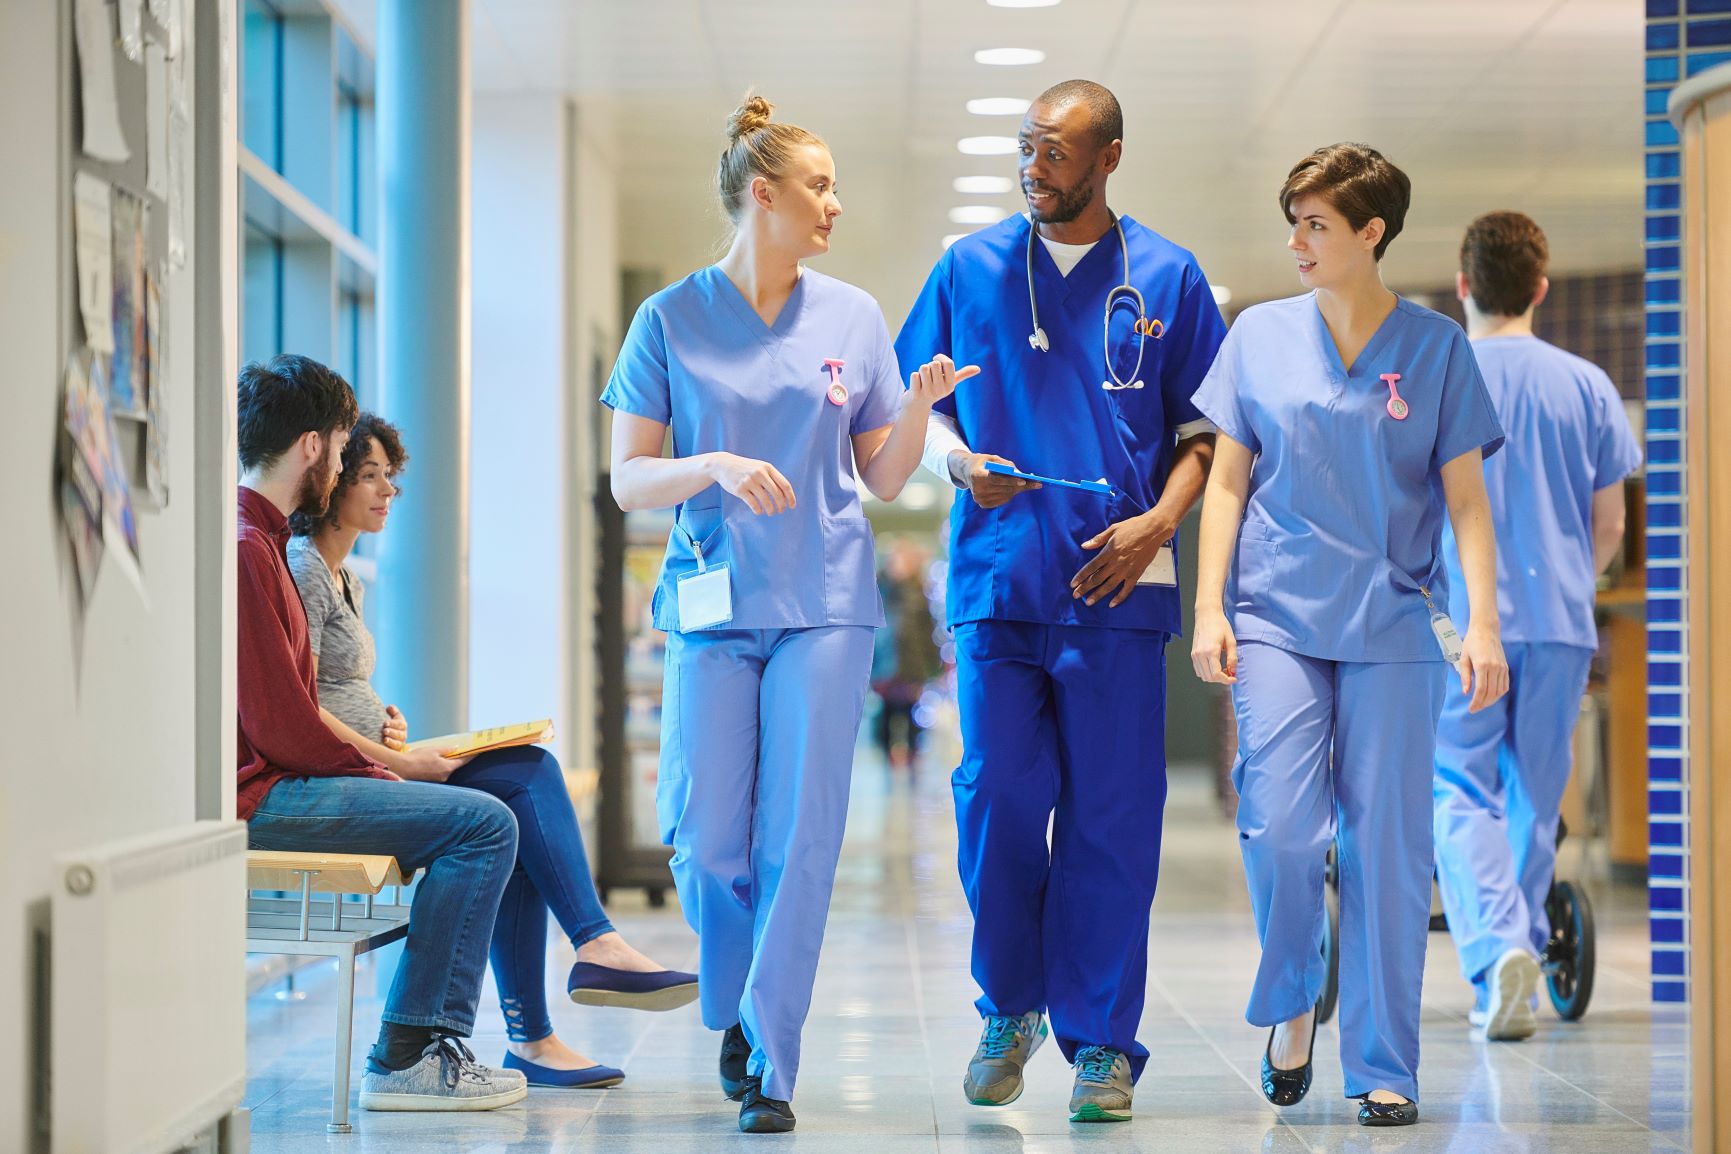 a medical consultant with two nurses walk along a hospital corridor